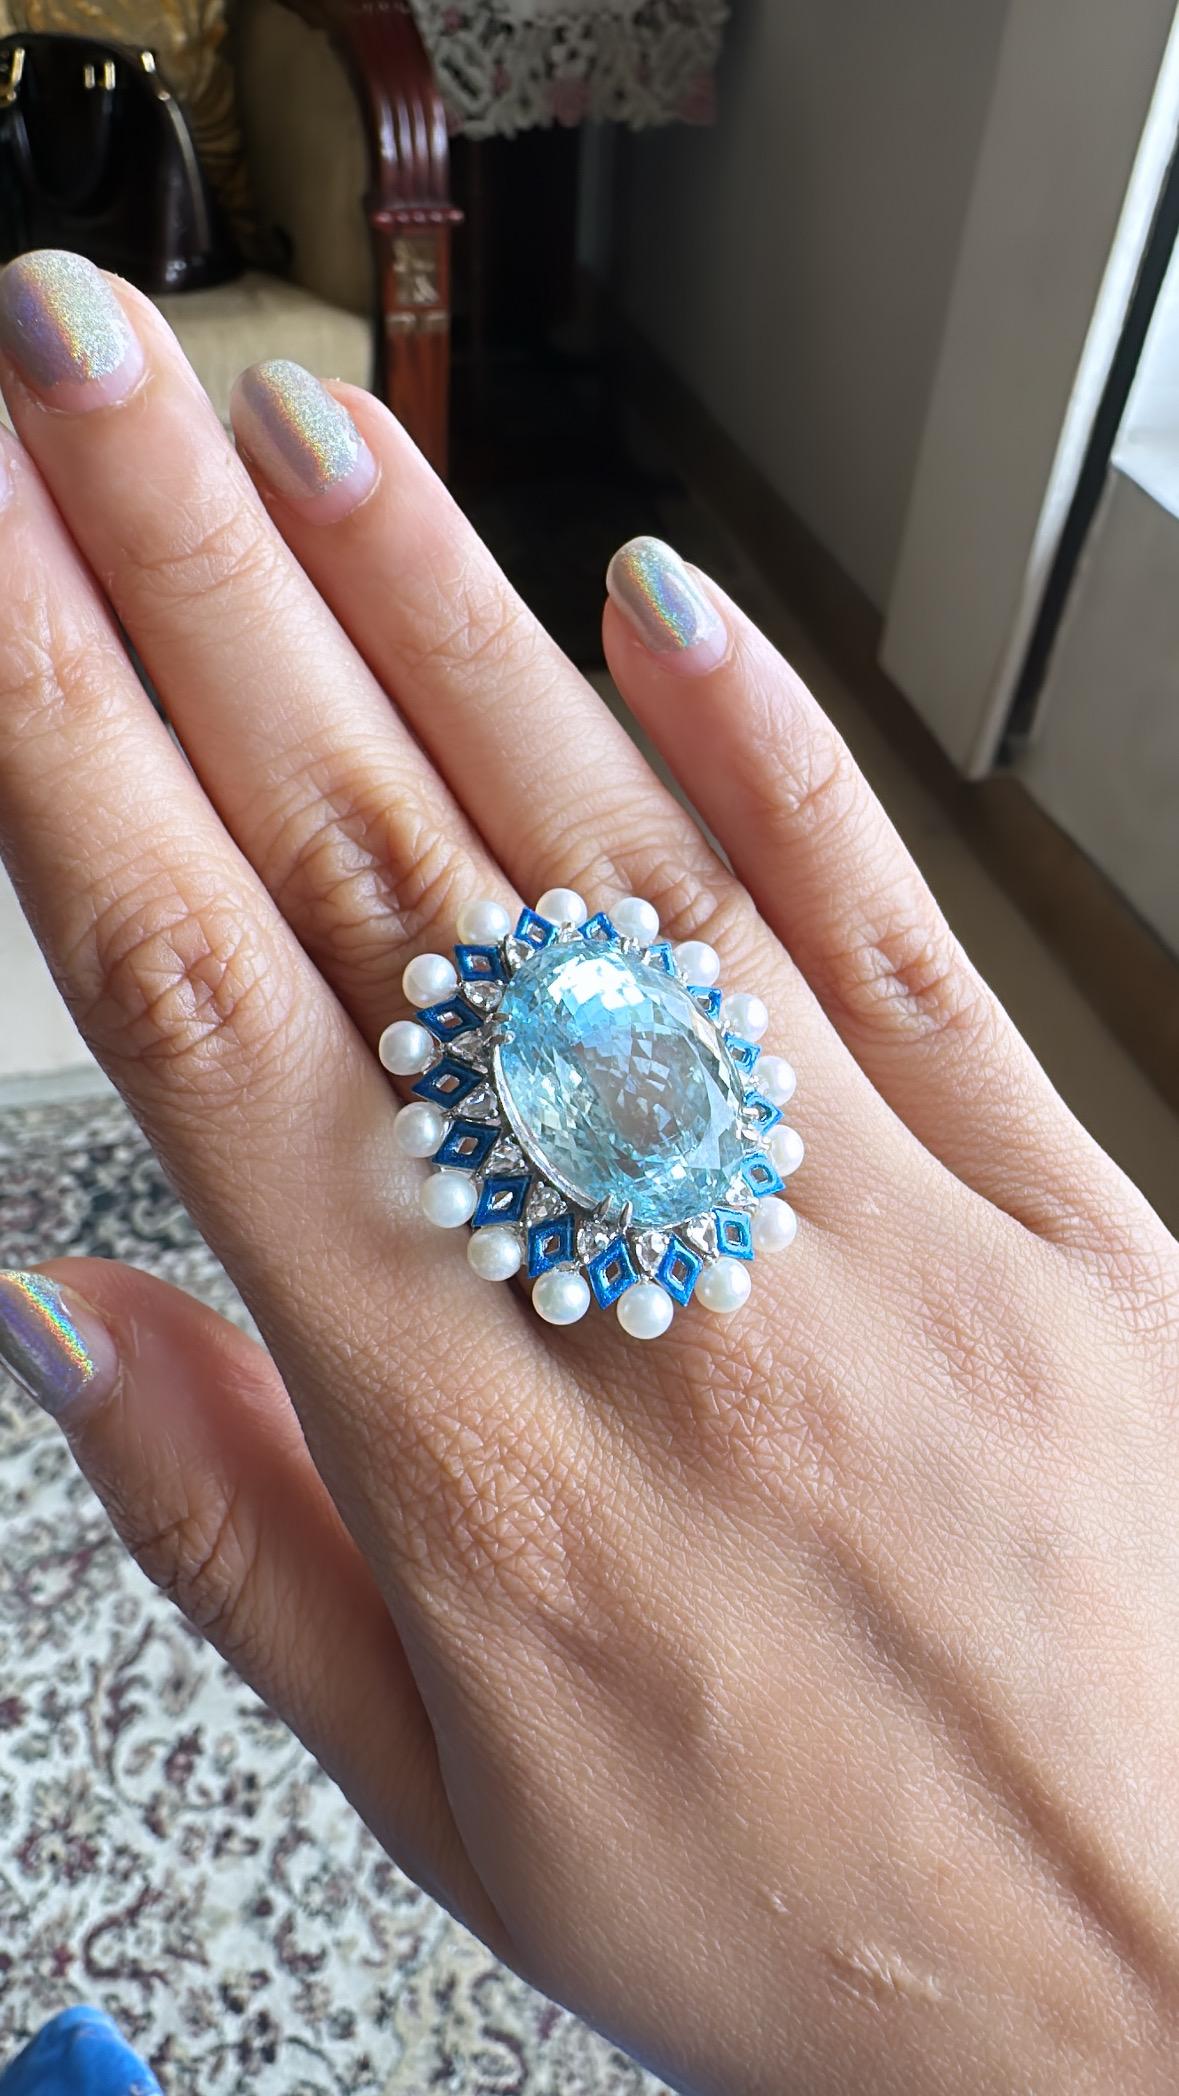 26.13 carats Aquamarine, Blue Enamel, Pearls & Diamonds Cocktail Ring  For Sale 1